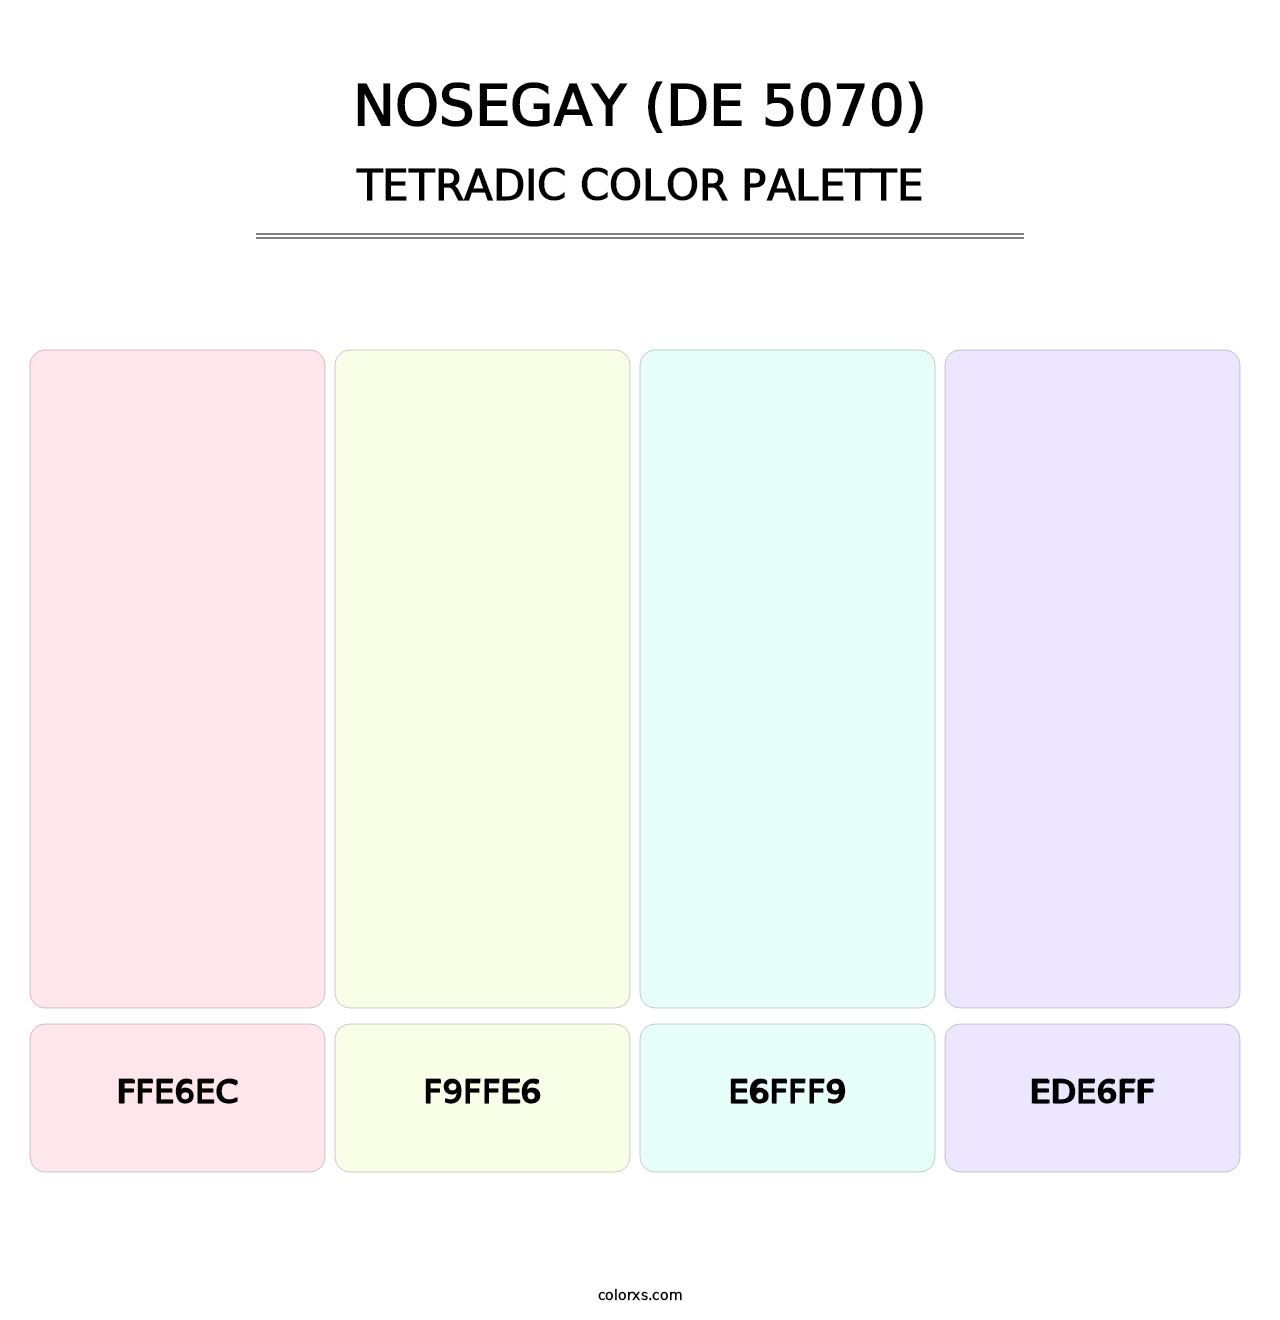 Nosegay (DE 5070) - Tetradic Color Palette